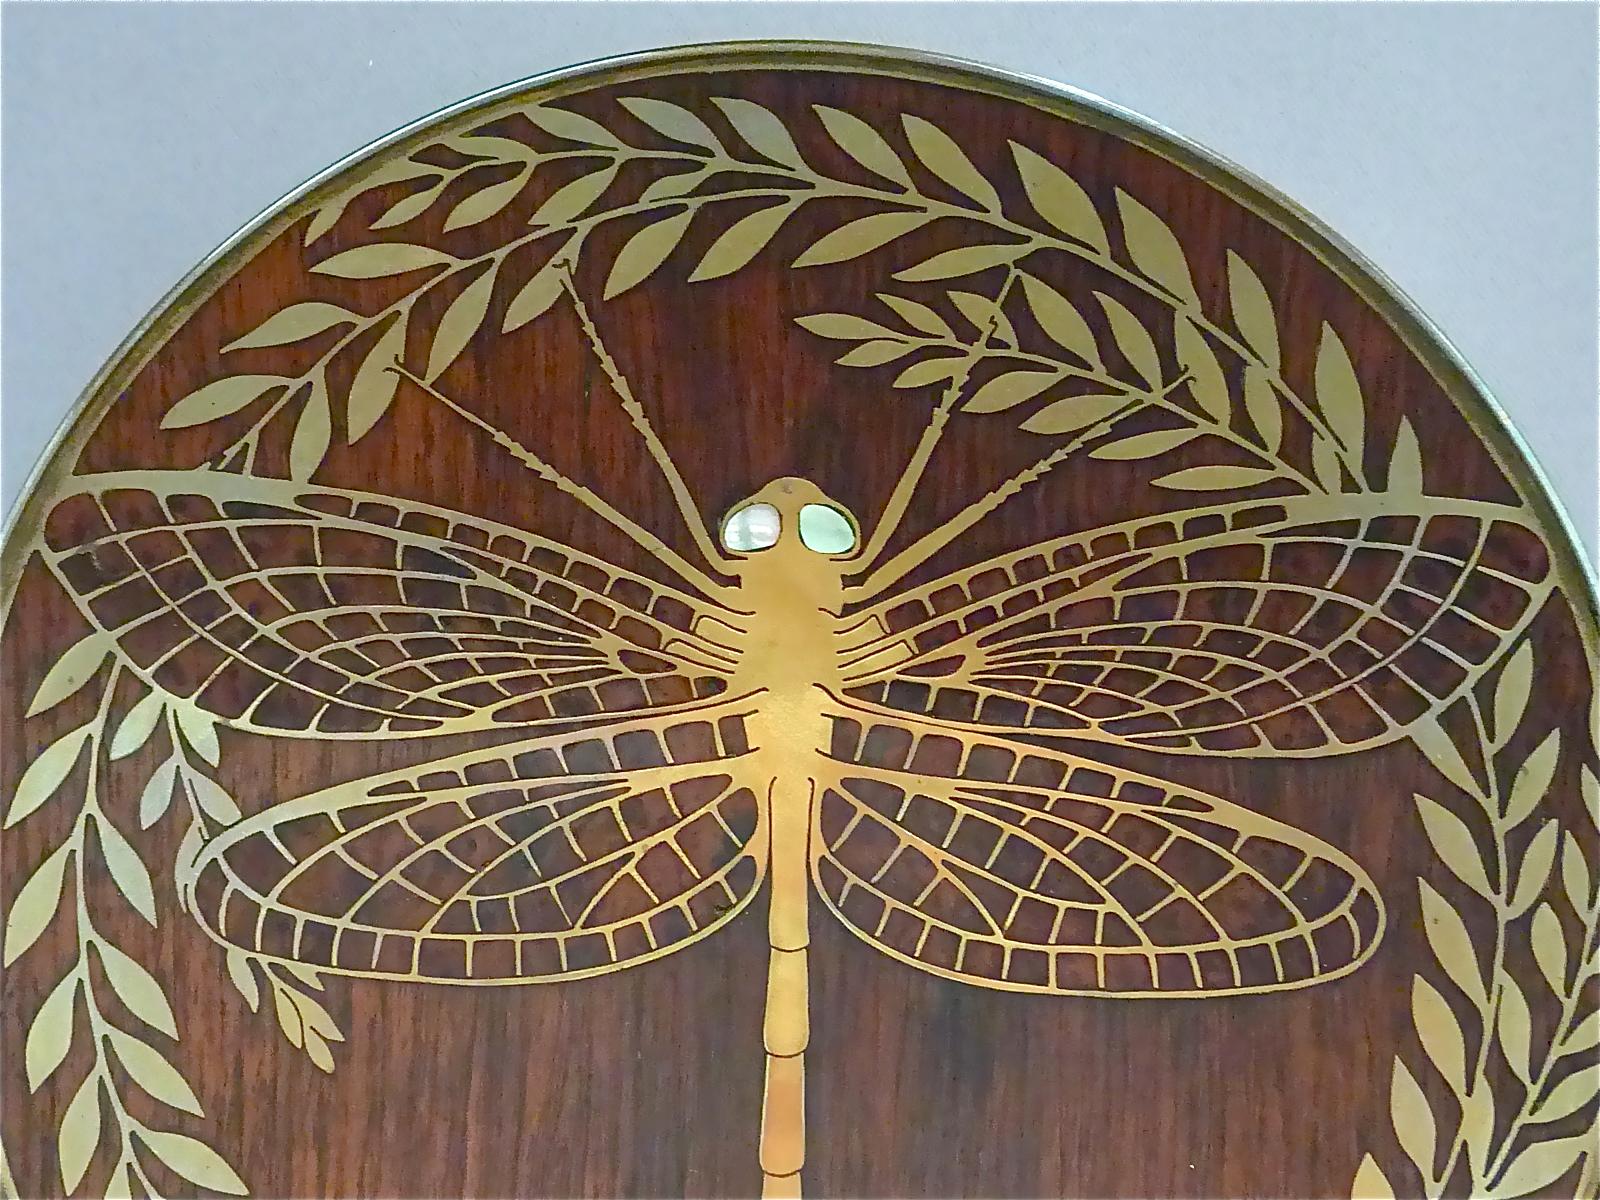 Jugendstil Fine Erhard Sohne Dragonfly Bowl Tray Wood Inlay Brass Art Nouveau Tiffany Style